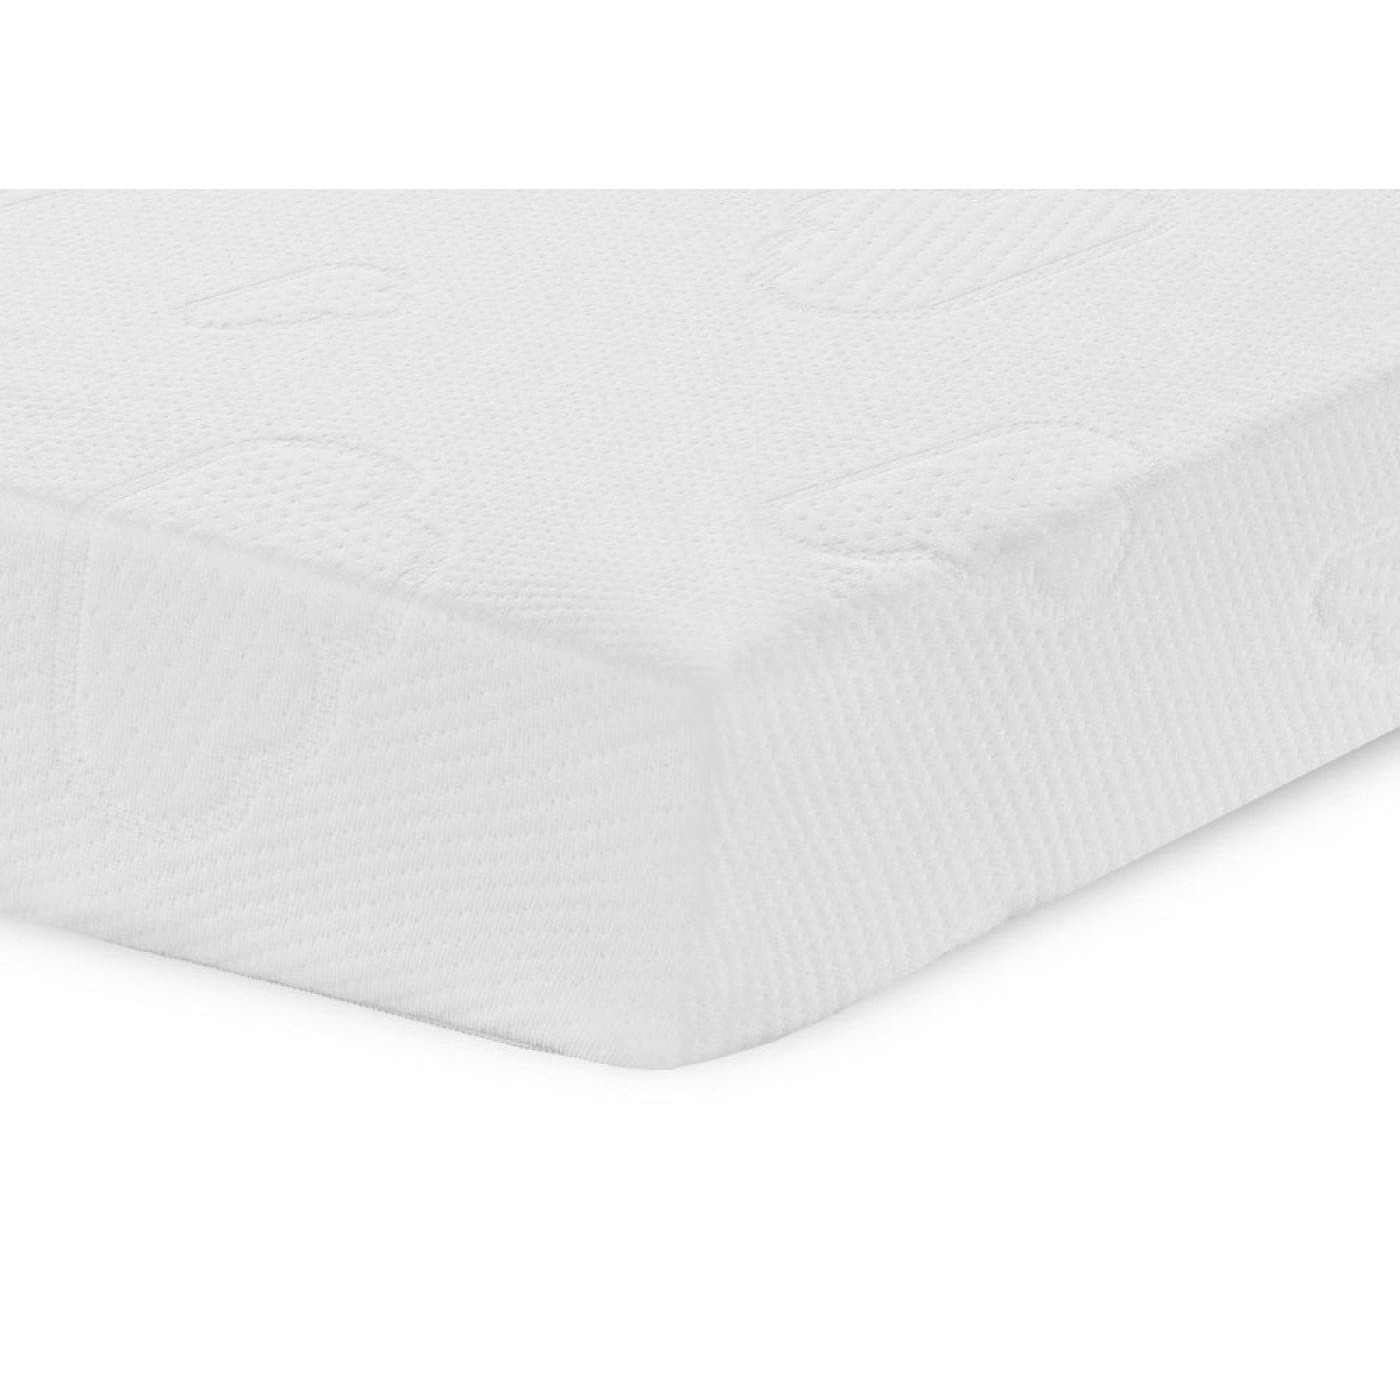 Silentnight Safe Nights Snuggle Cot Mattress - 2'4 Cot Bed